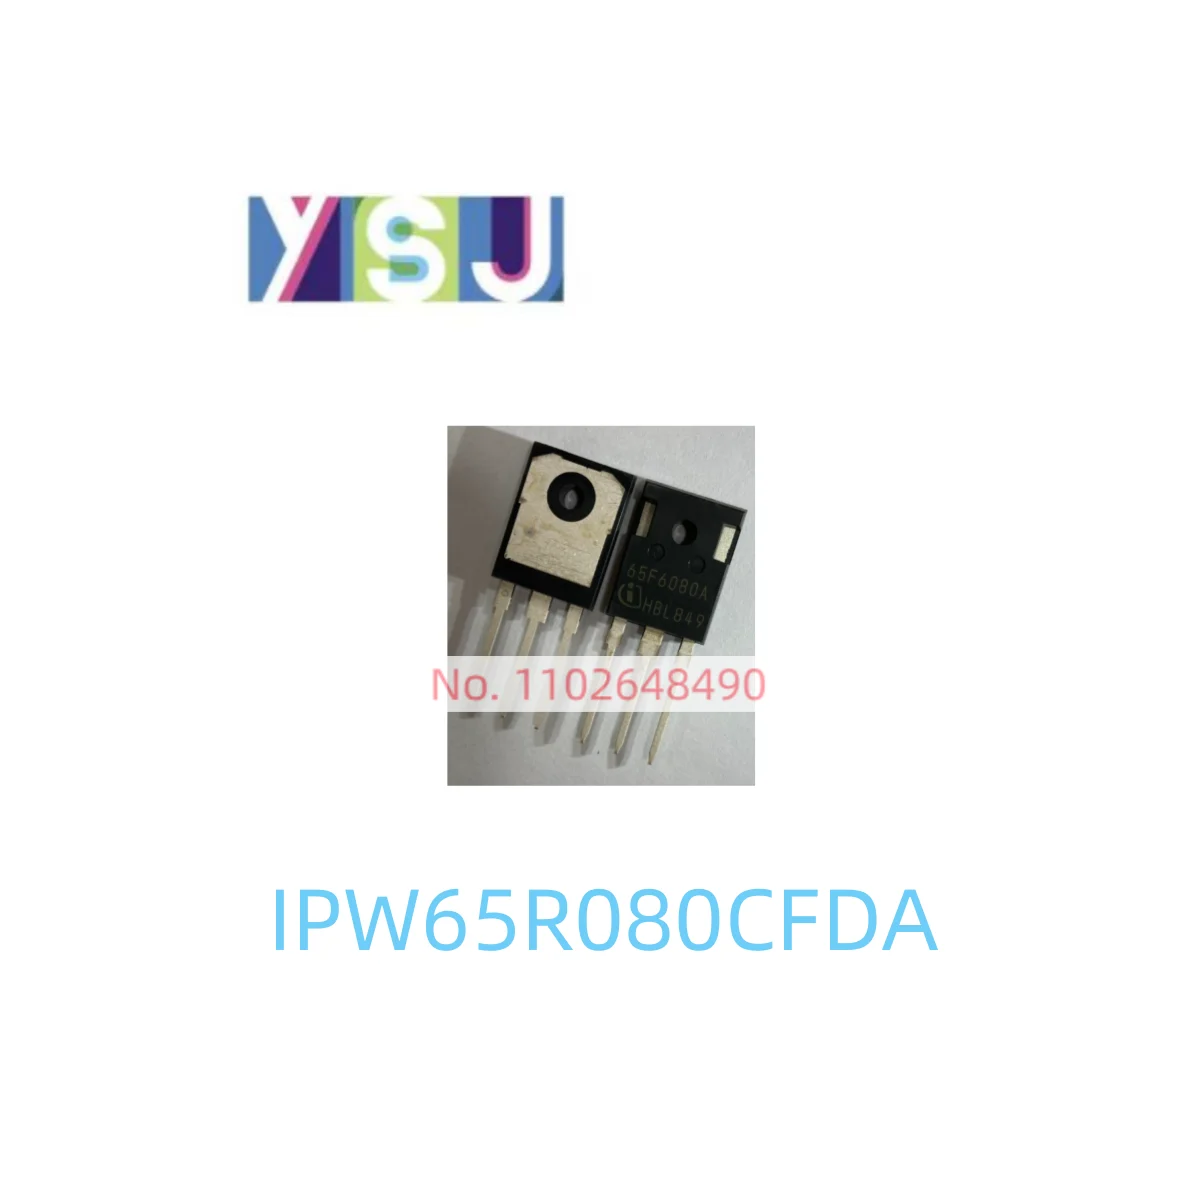 

IPW65R080CFDA IC Brand New Microcontroller EncapsulationTO-247